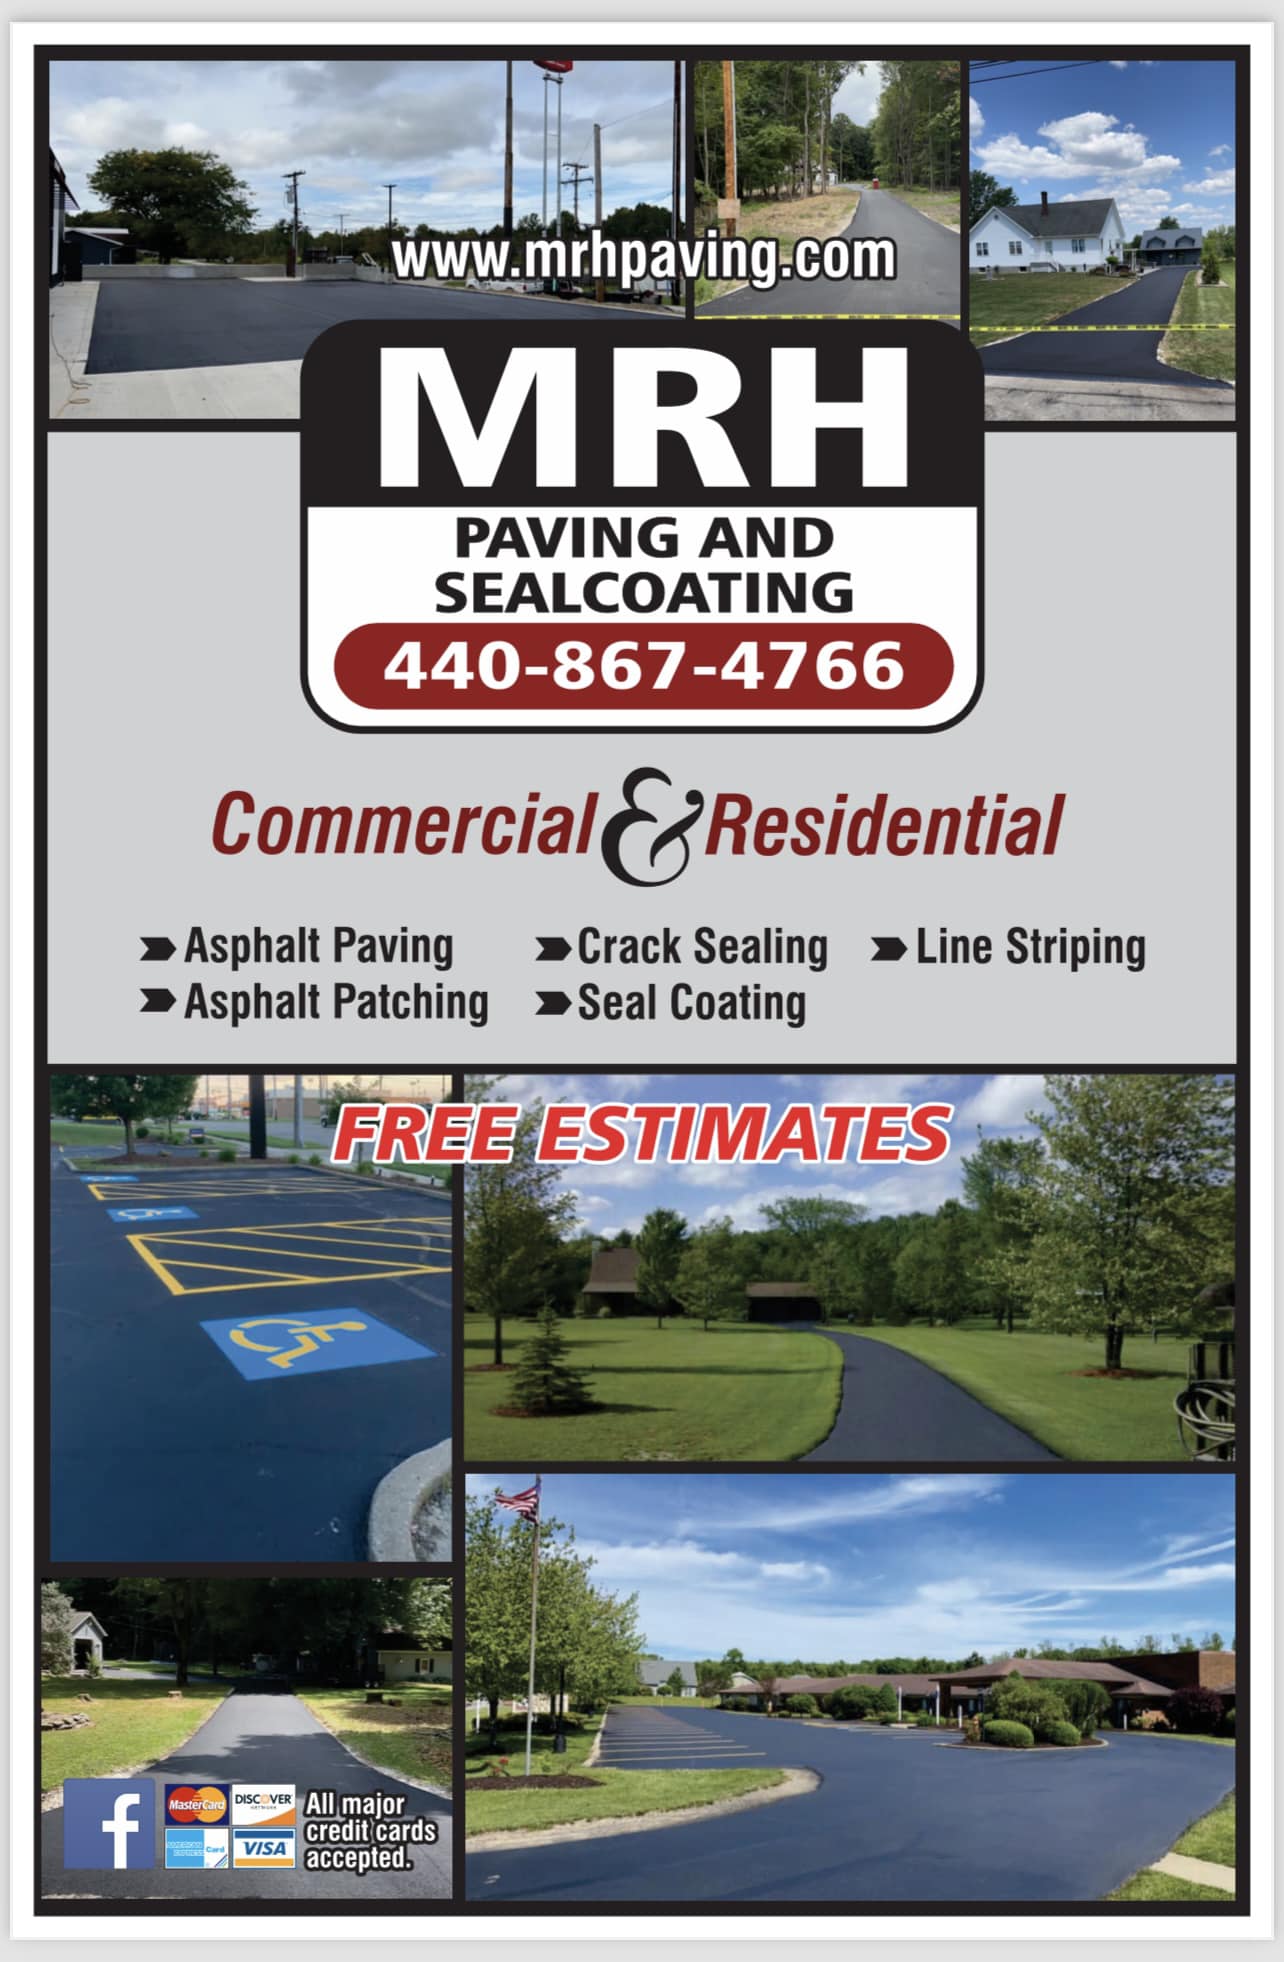 MRH Paving & Sealcoating 5319 Warner Hollow Rd, Windsor Ohio 44099